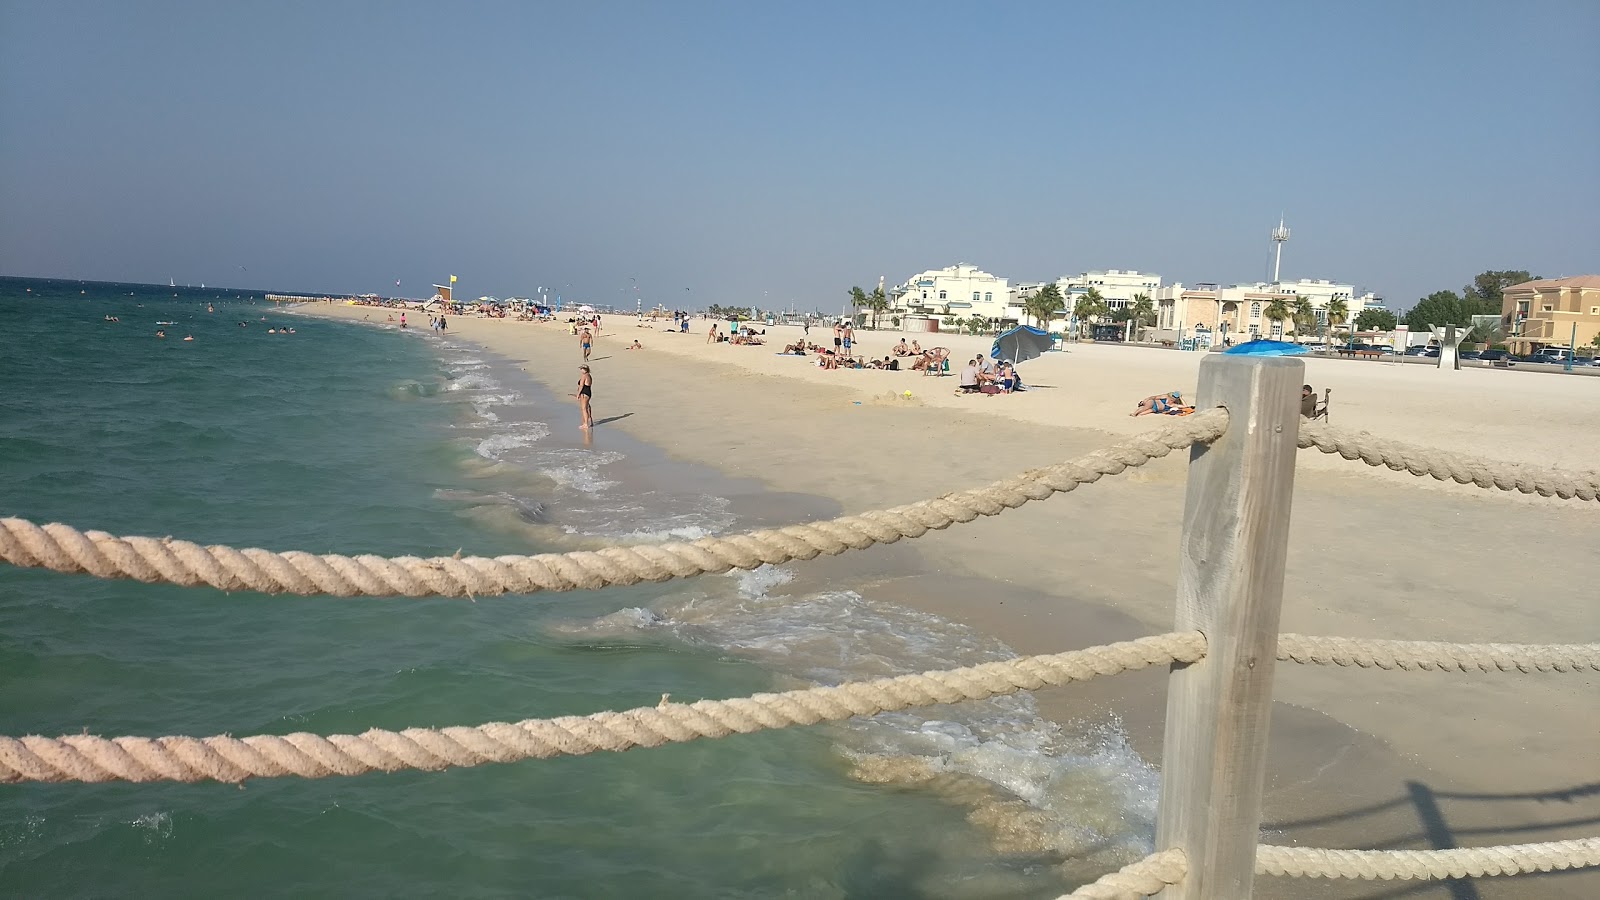 Fotografija Umm Suqeim beach z svetel fin pesek površino